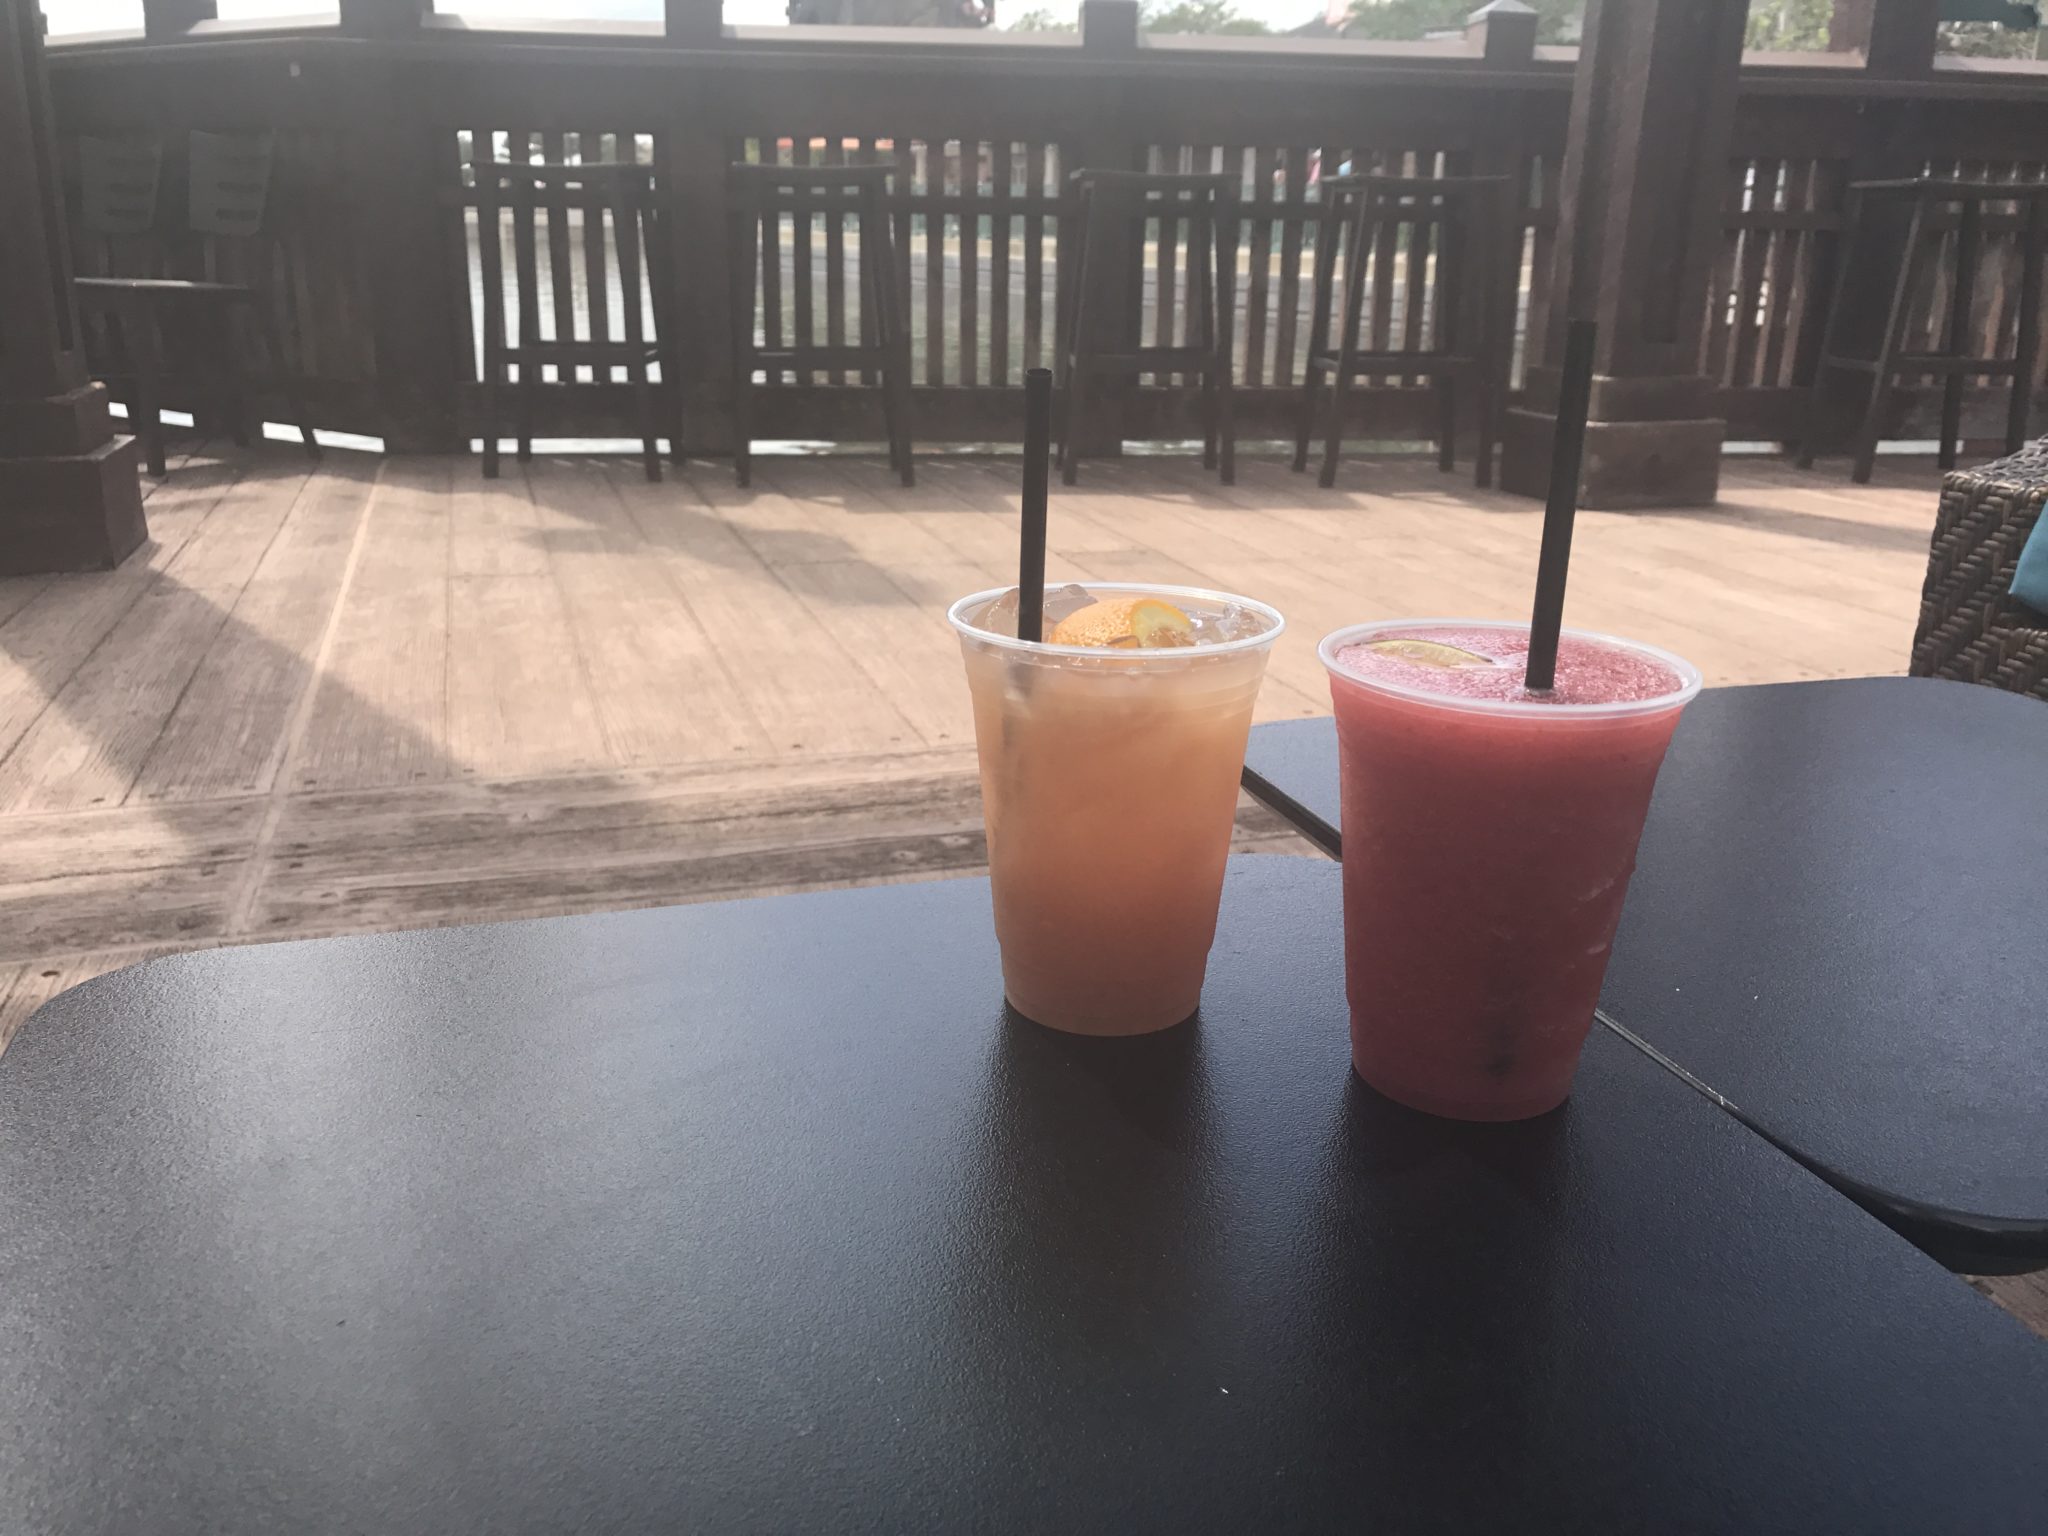 Review of #ThrowbackThursday Drinks at Dockside Margaritas in Disney Springs